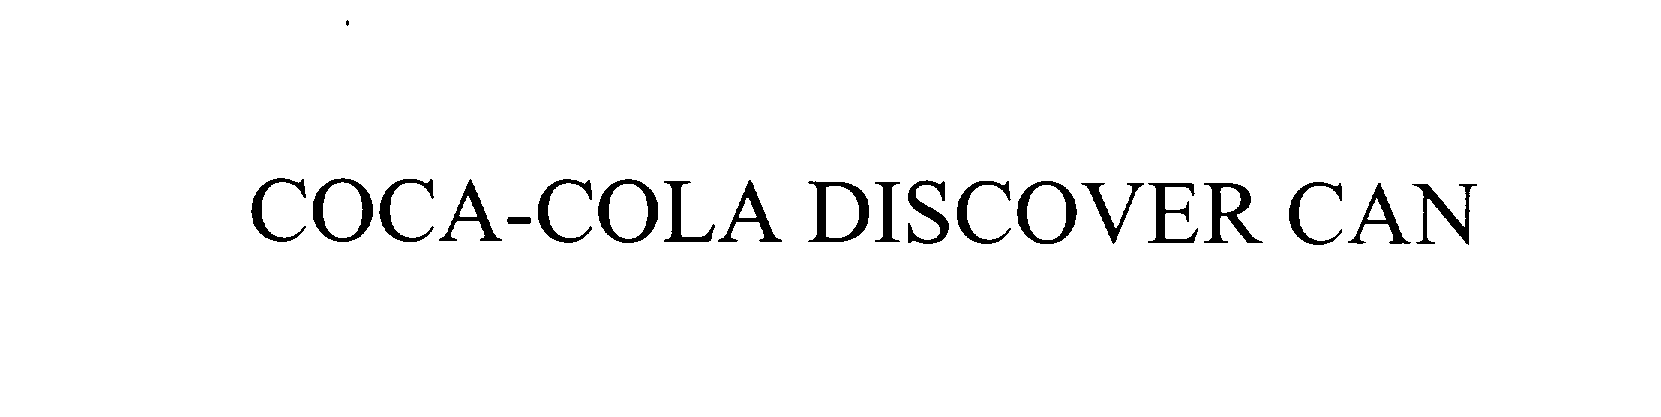  COCA-COLA DISCOVER CAN